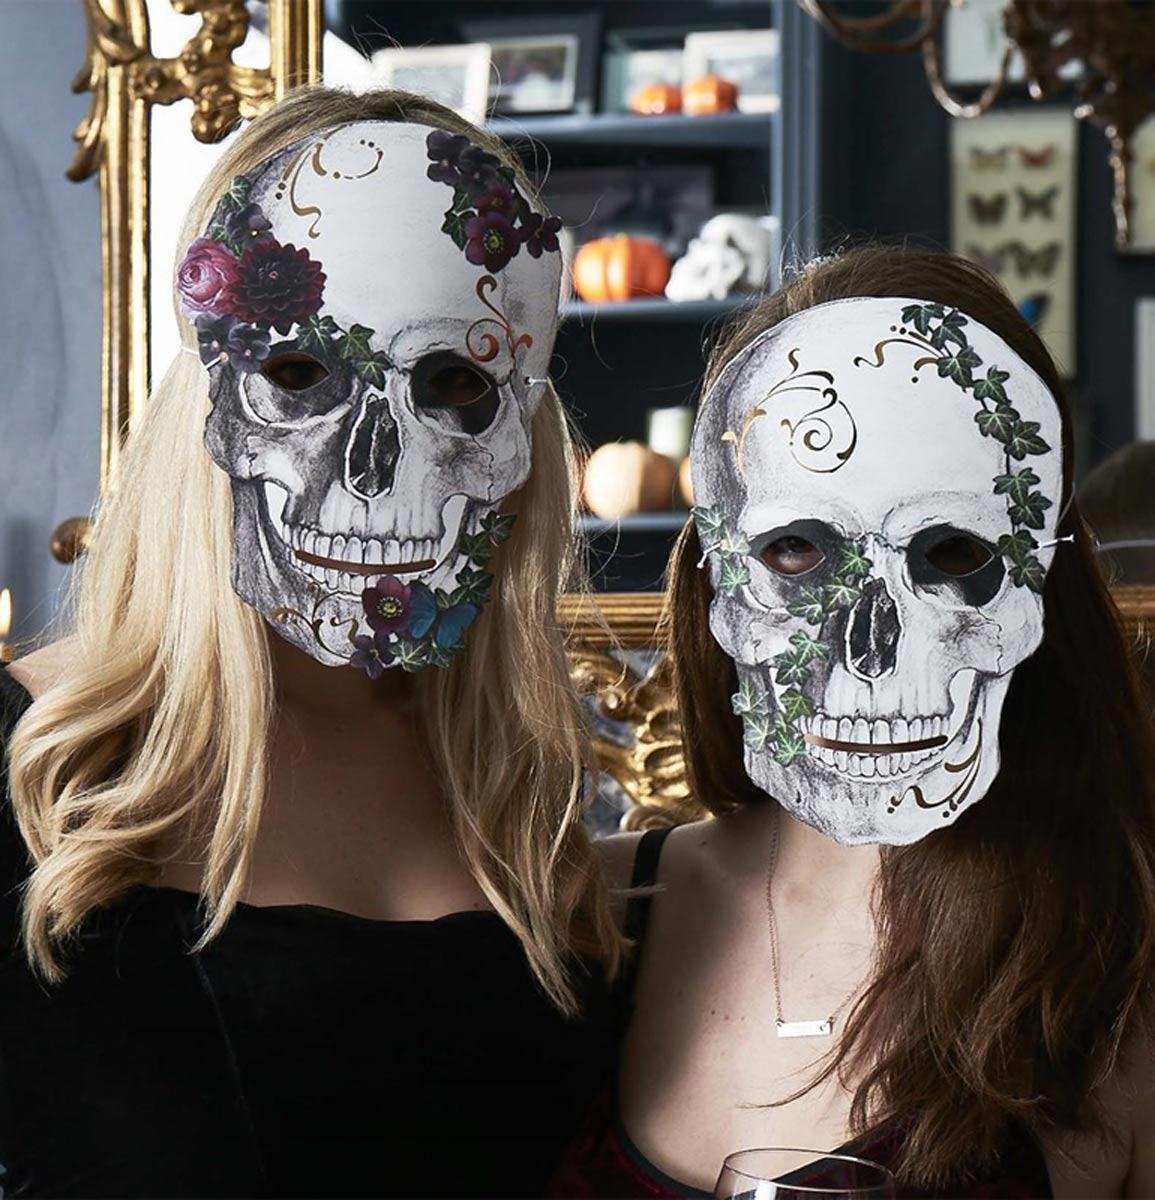 Baroque Skeleton Masks 4 of each design by Talking Tables BQSKELE-MASKS available here at Karnival Costumes online party shop